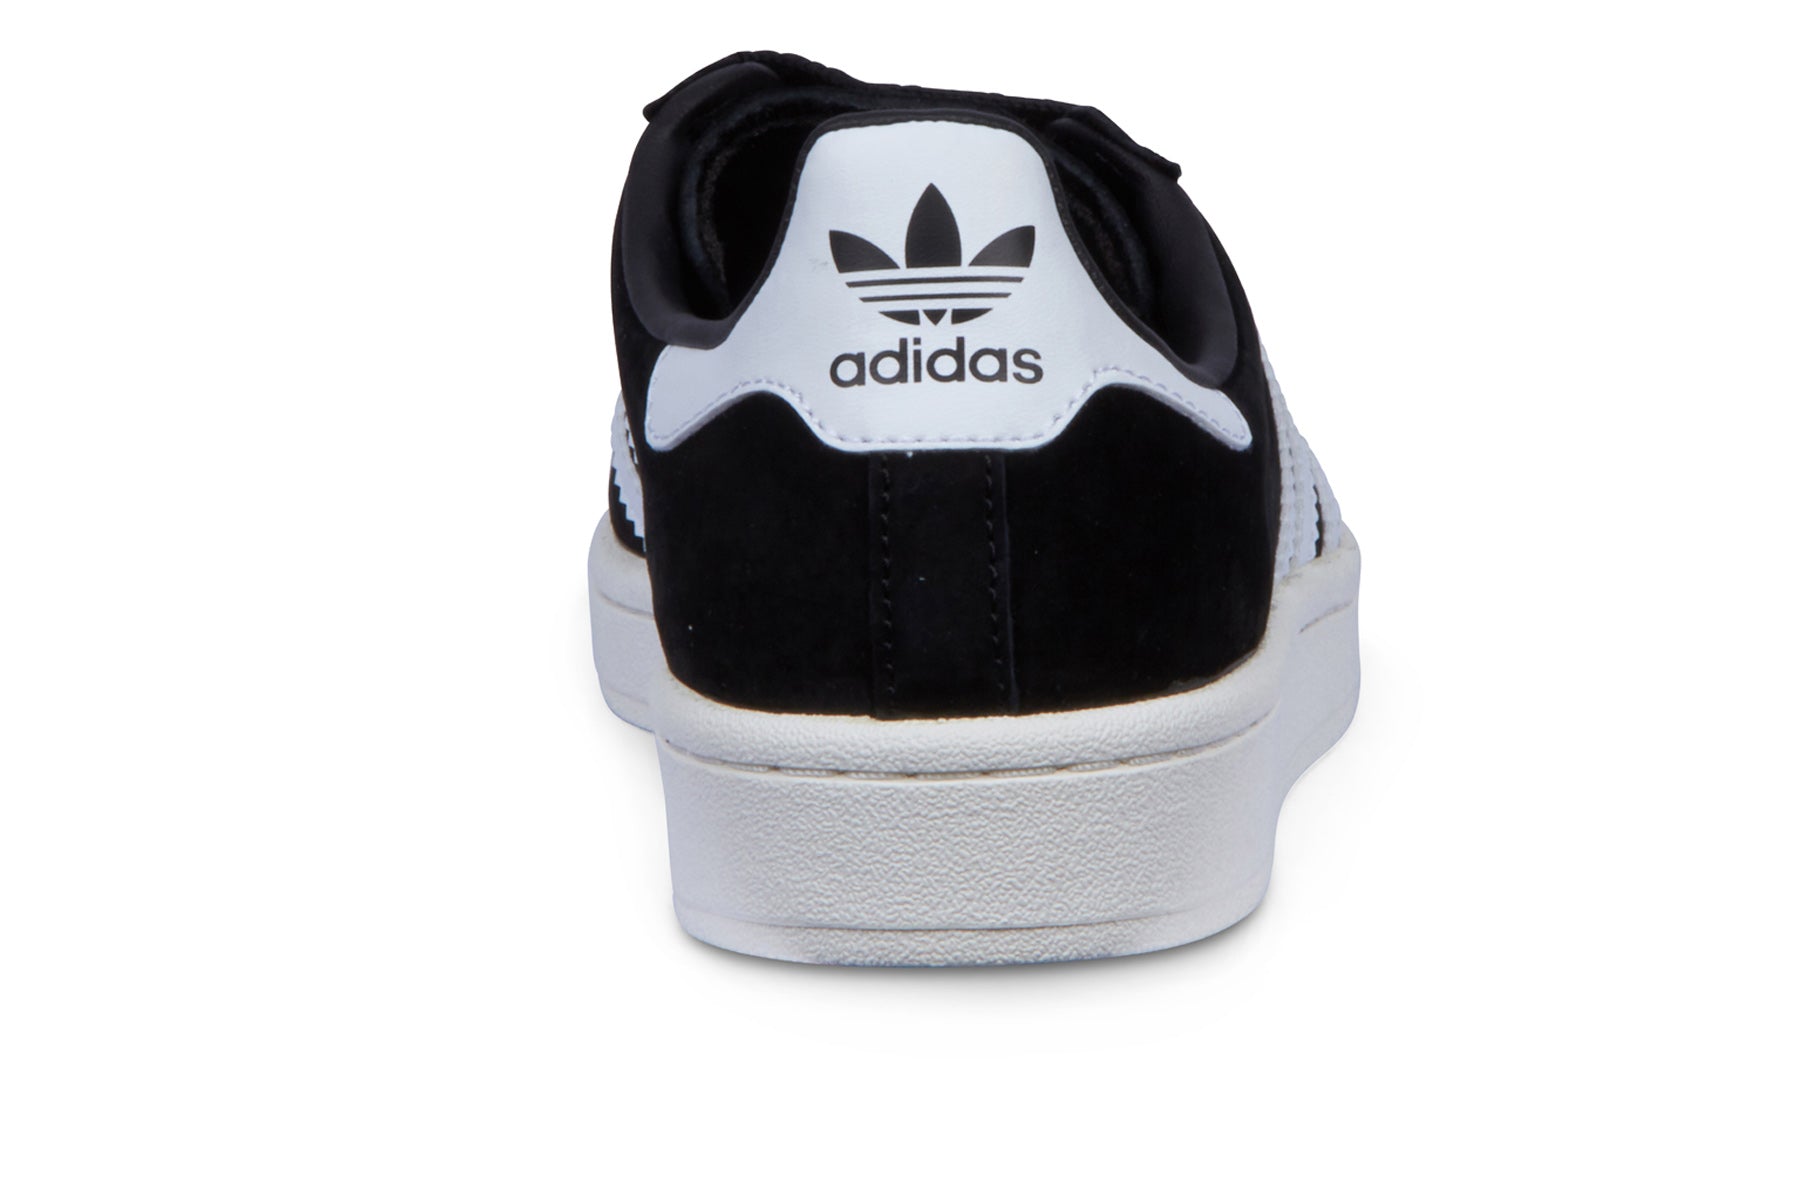 Adidas Campus - Black/Footwear White/Chalk White